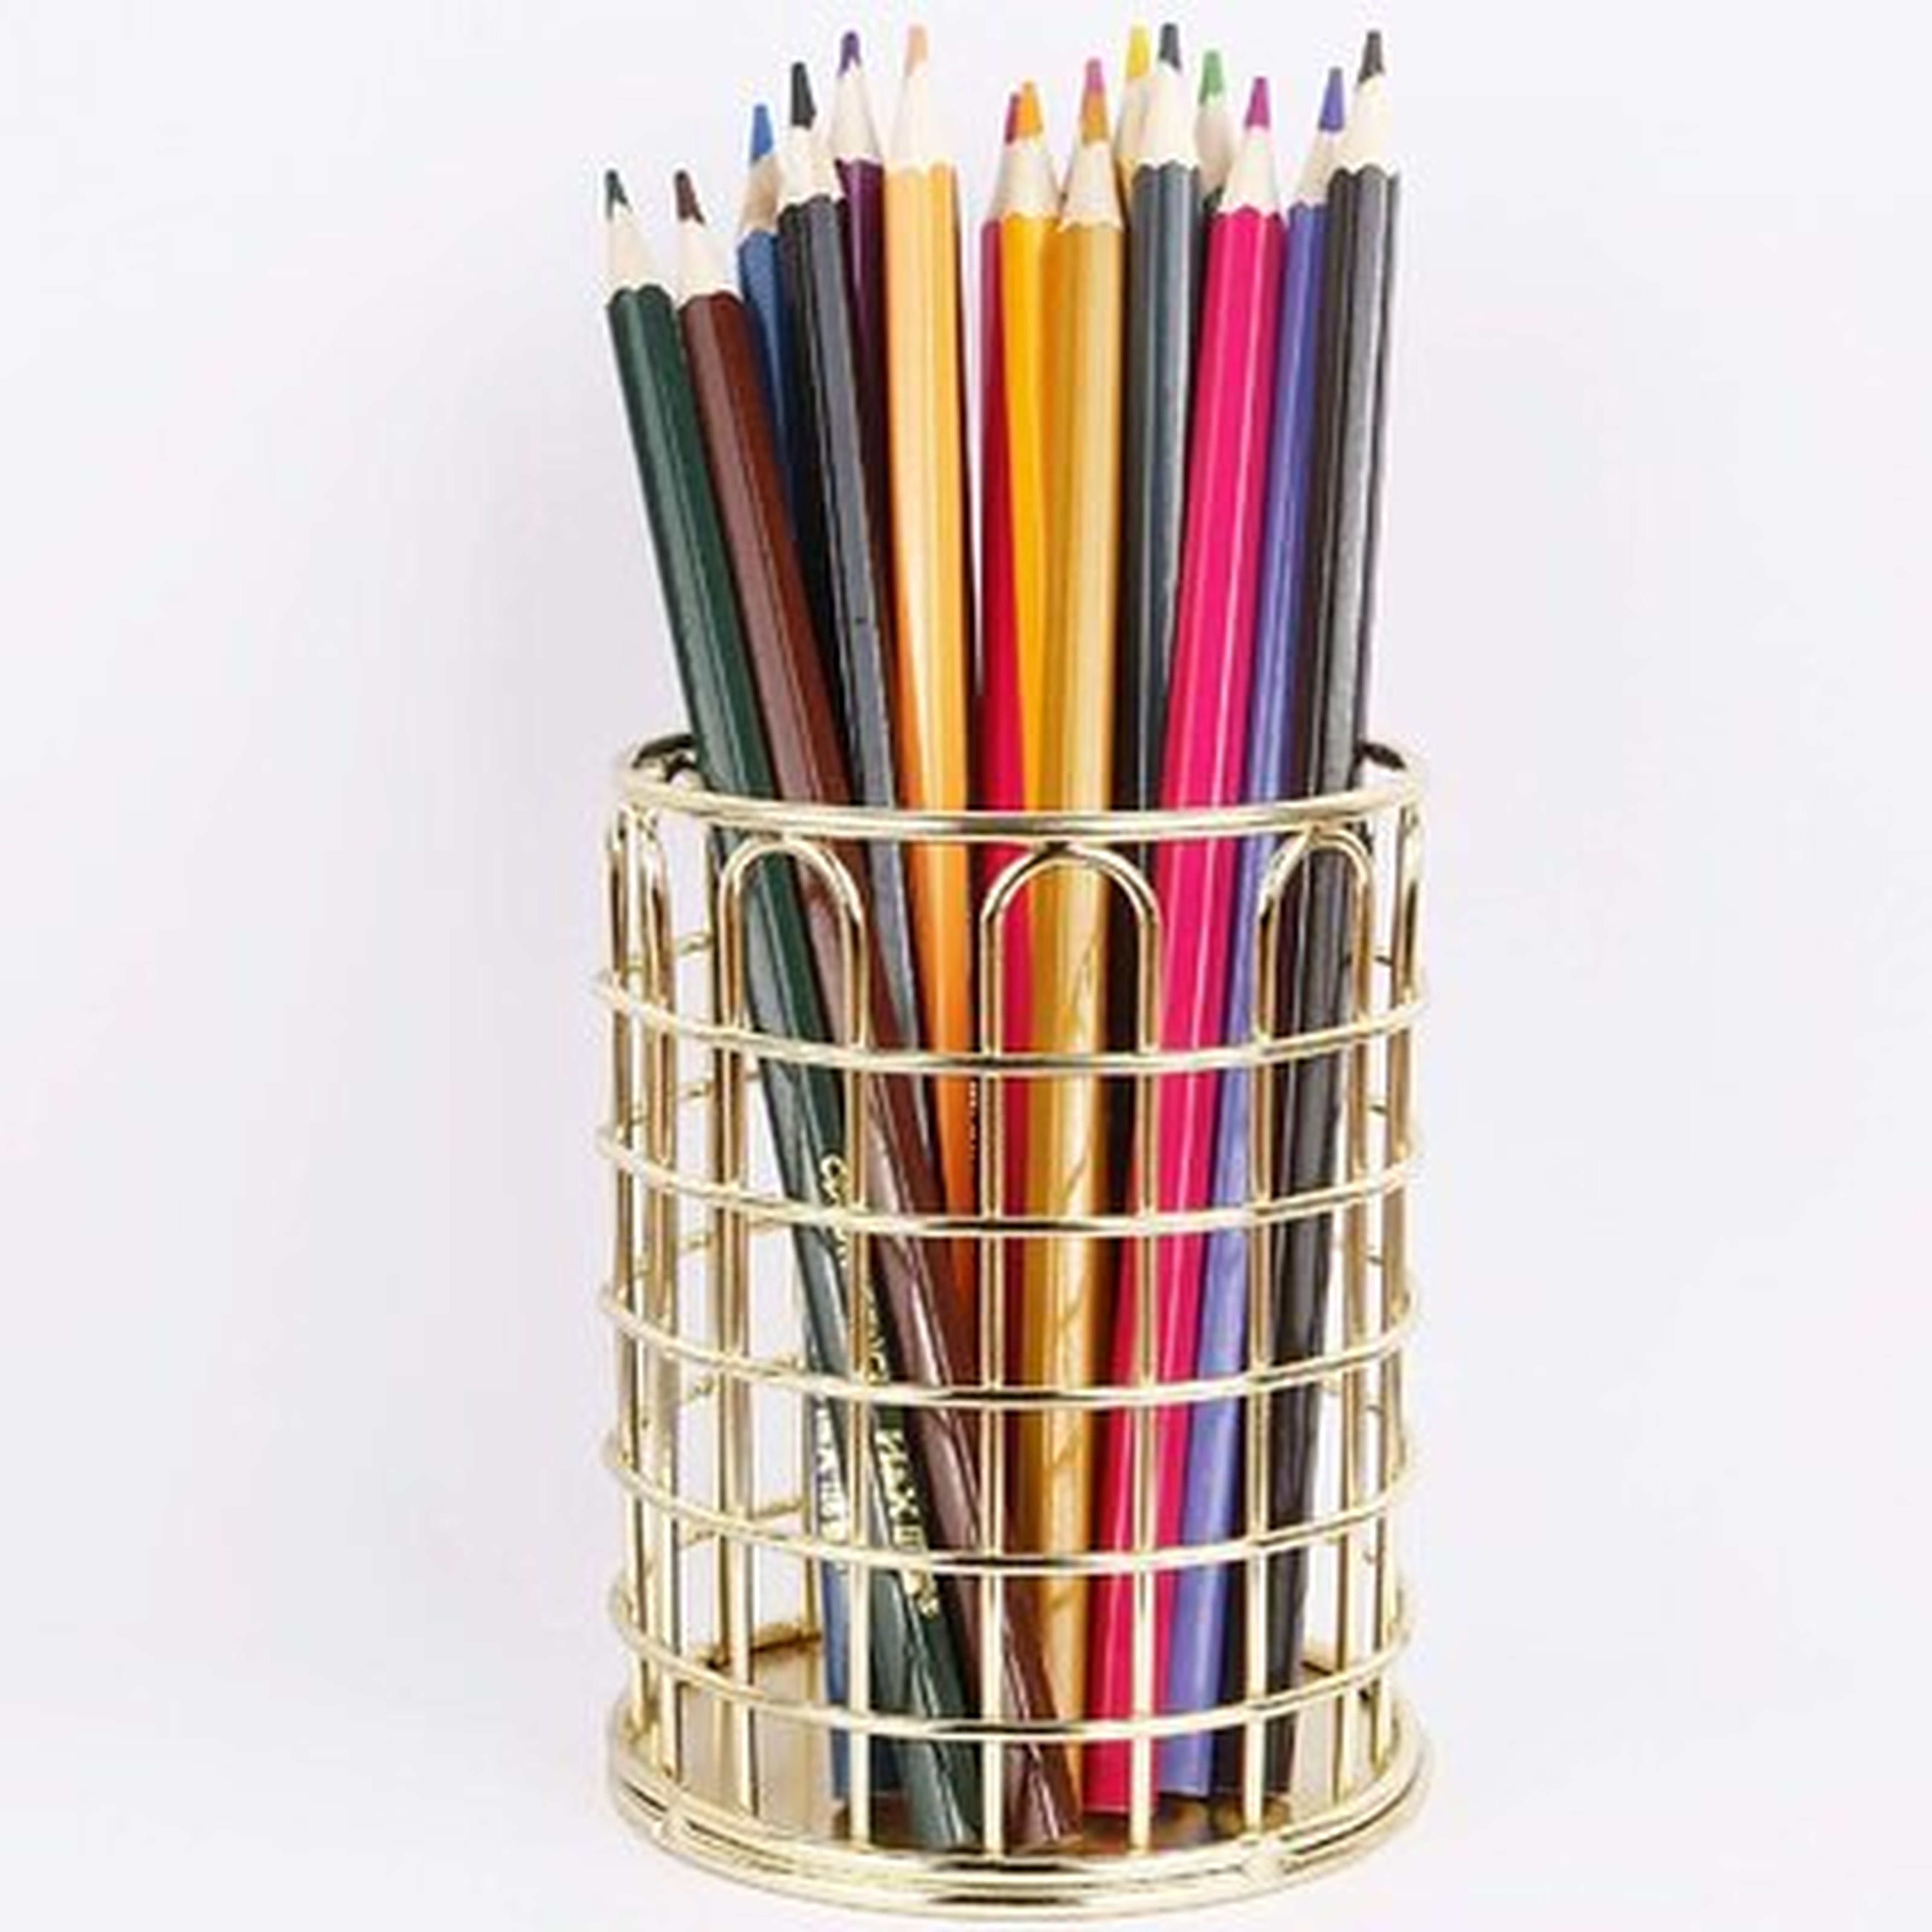 Pen Pencil Holder Makeup Brushes Metal Wire Holder Decorative Desk Storage Organizer Gold Desk Accessories 2Pack - Wayfair